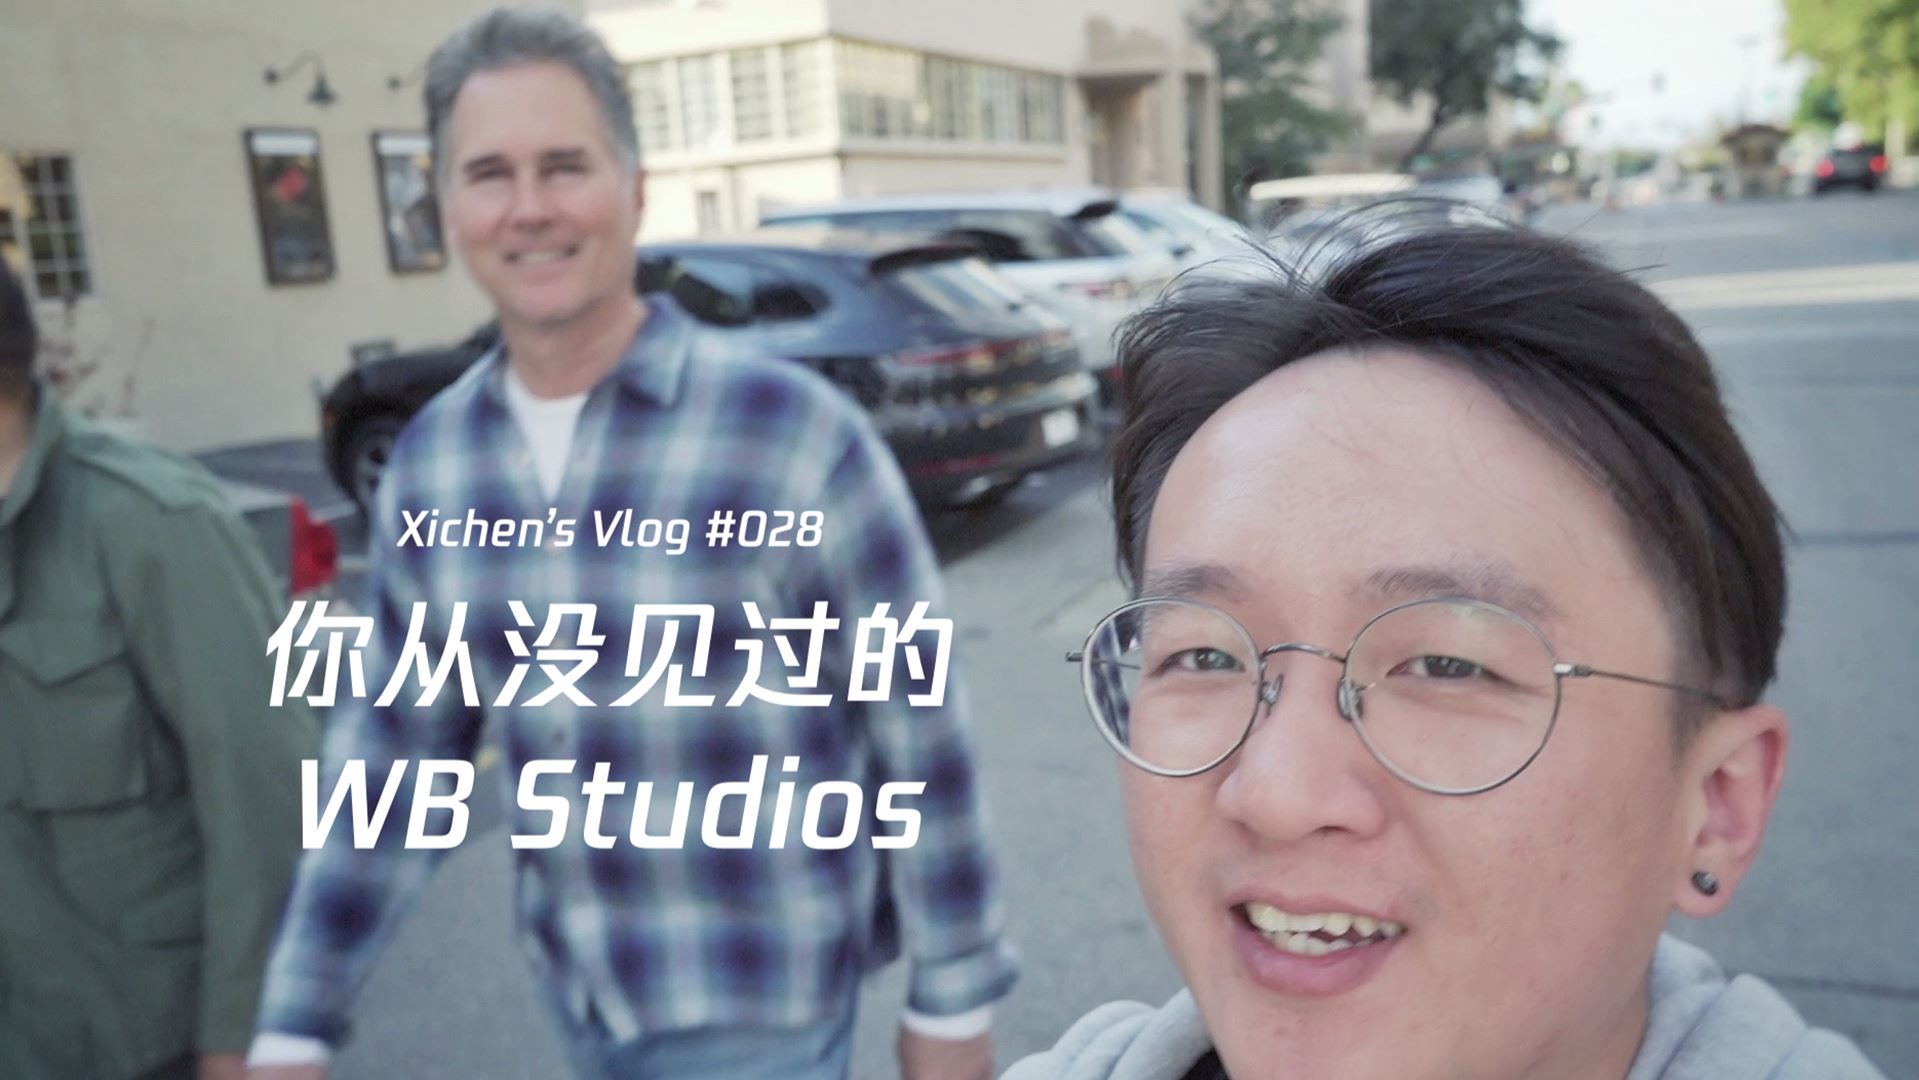 Xichen Vlog 028 Cover